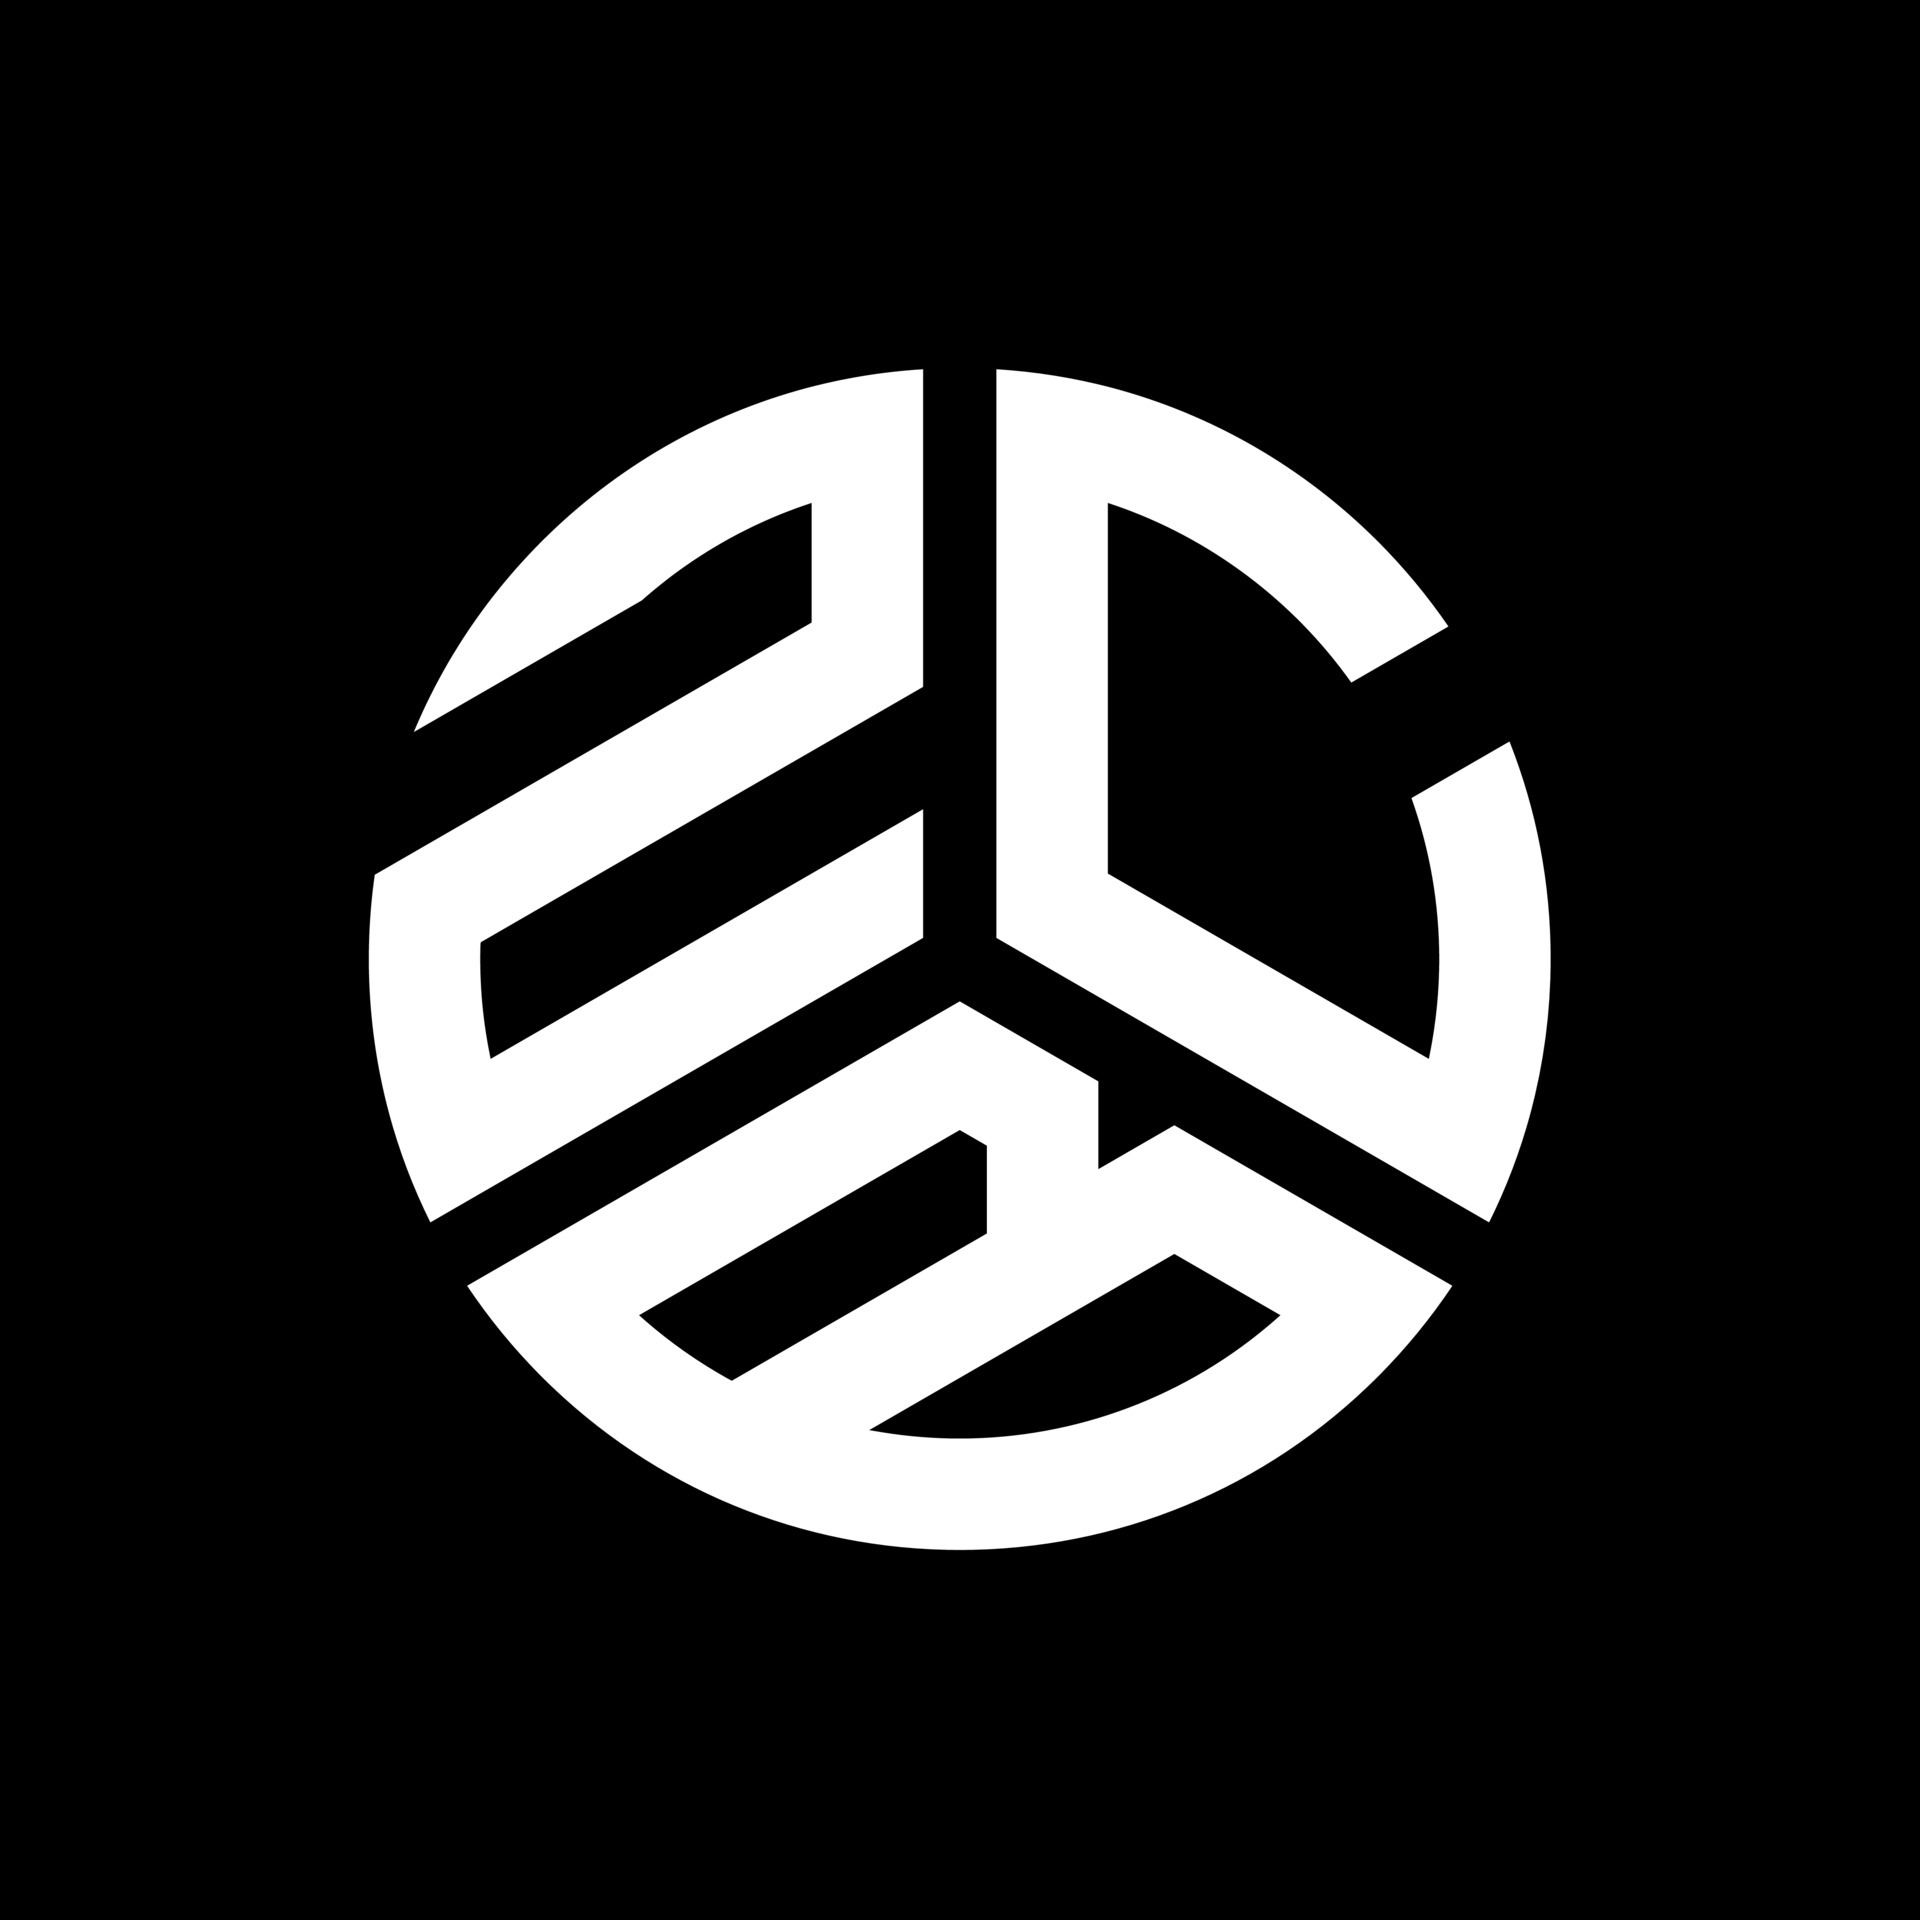 ZCB letter logo design on black background. ZCB creative initials .